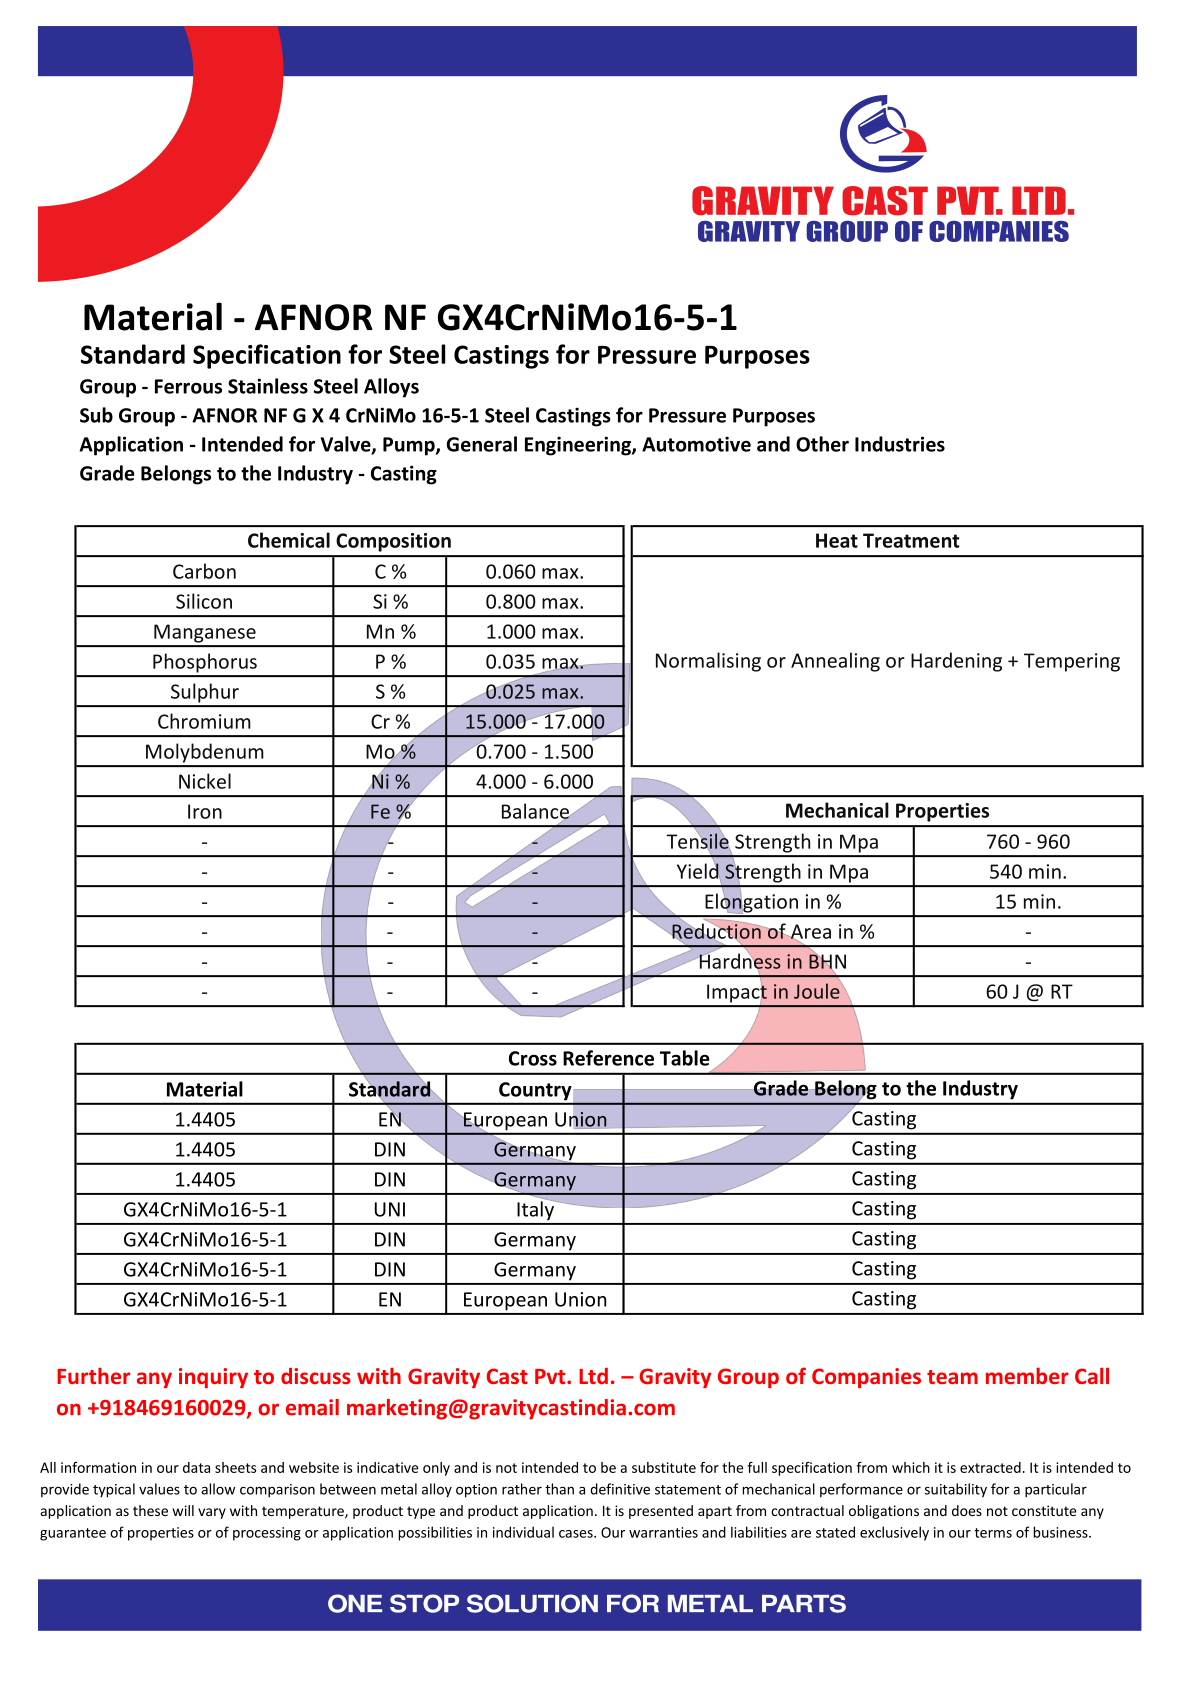 AFNOR NF GX4CrNiMo16-5-1.pdf